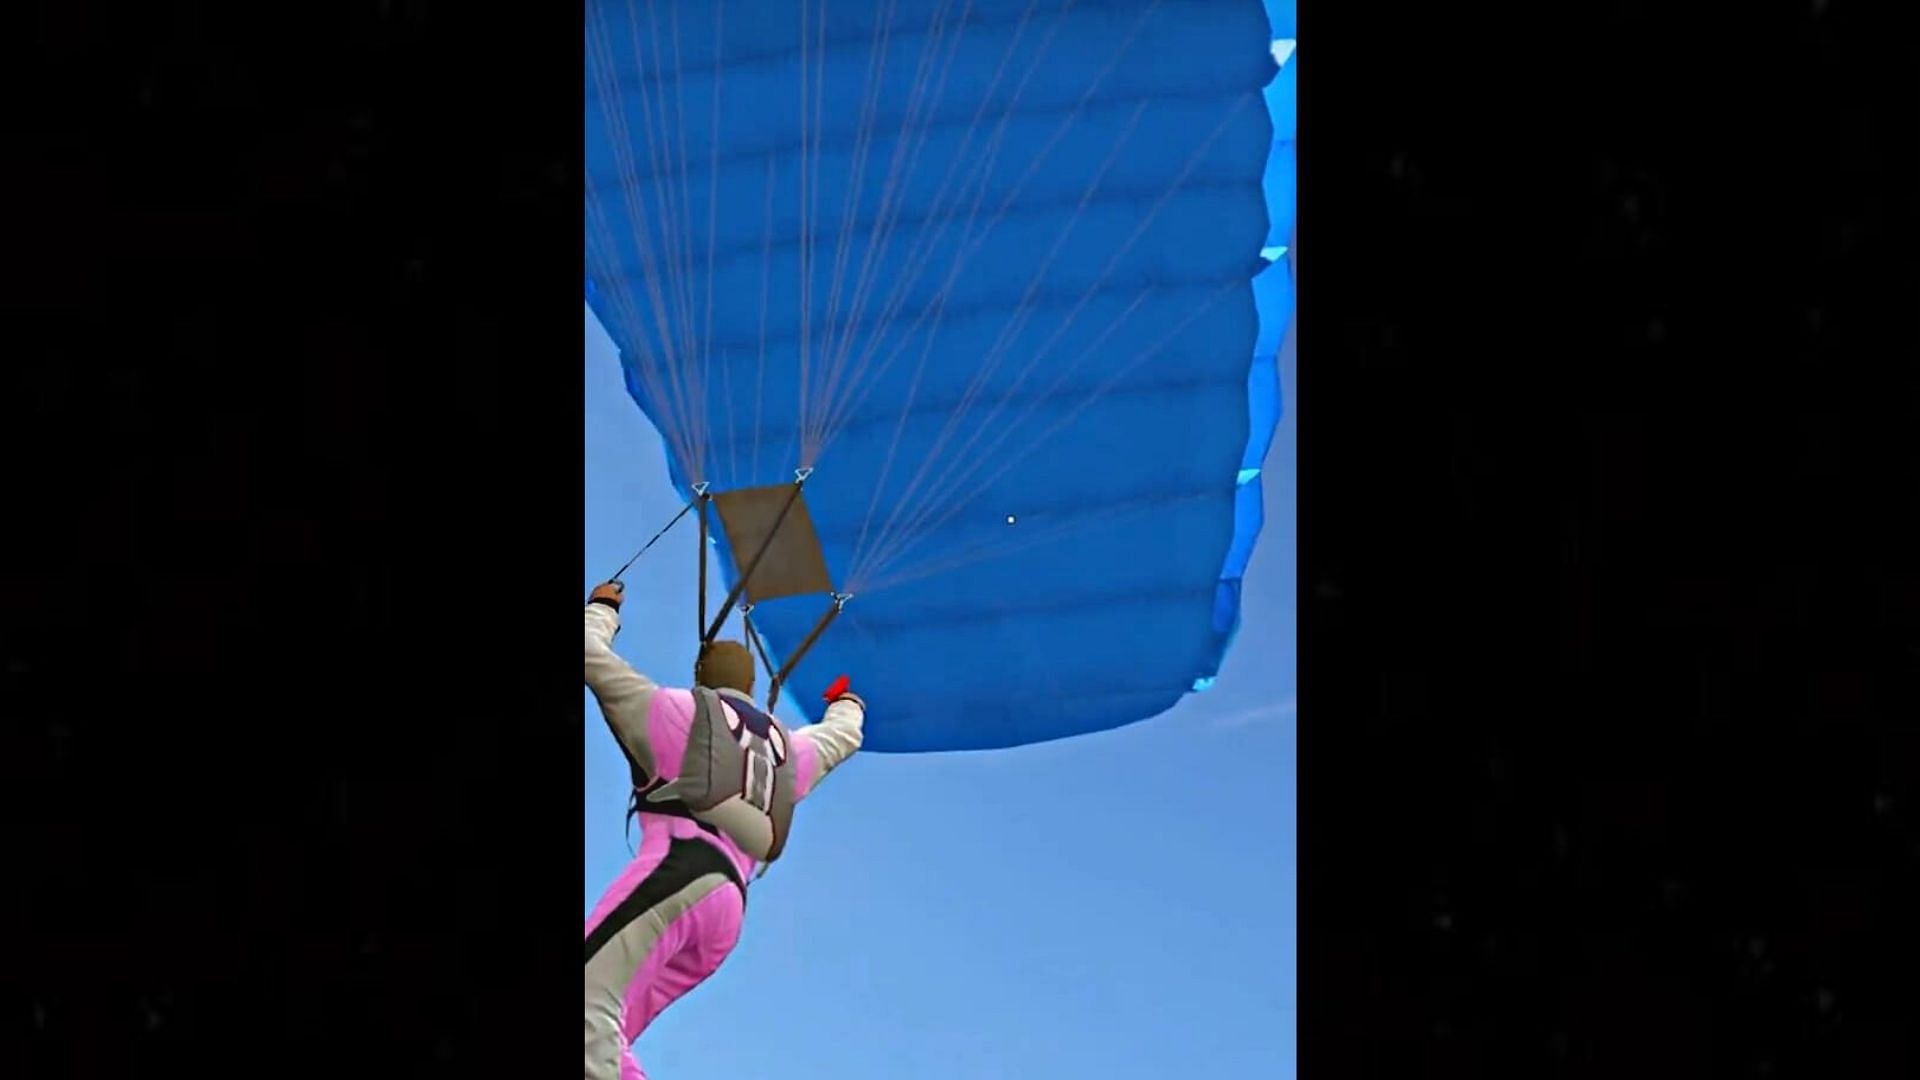 Bursting a parachute with a Flare Gun (Image via YouTube/GrayStillPlays)